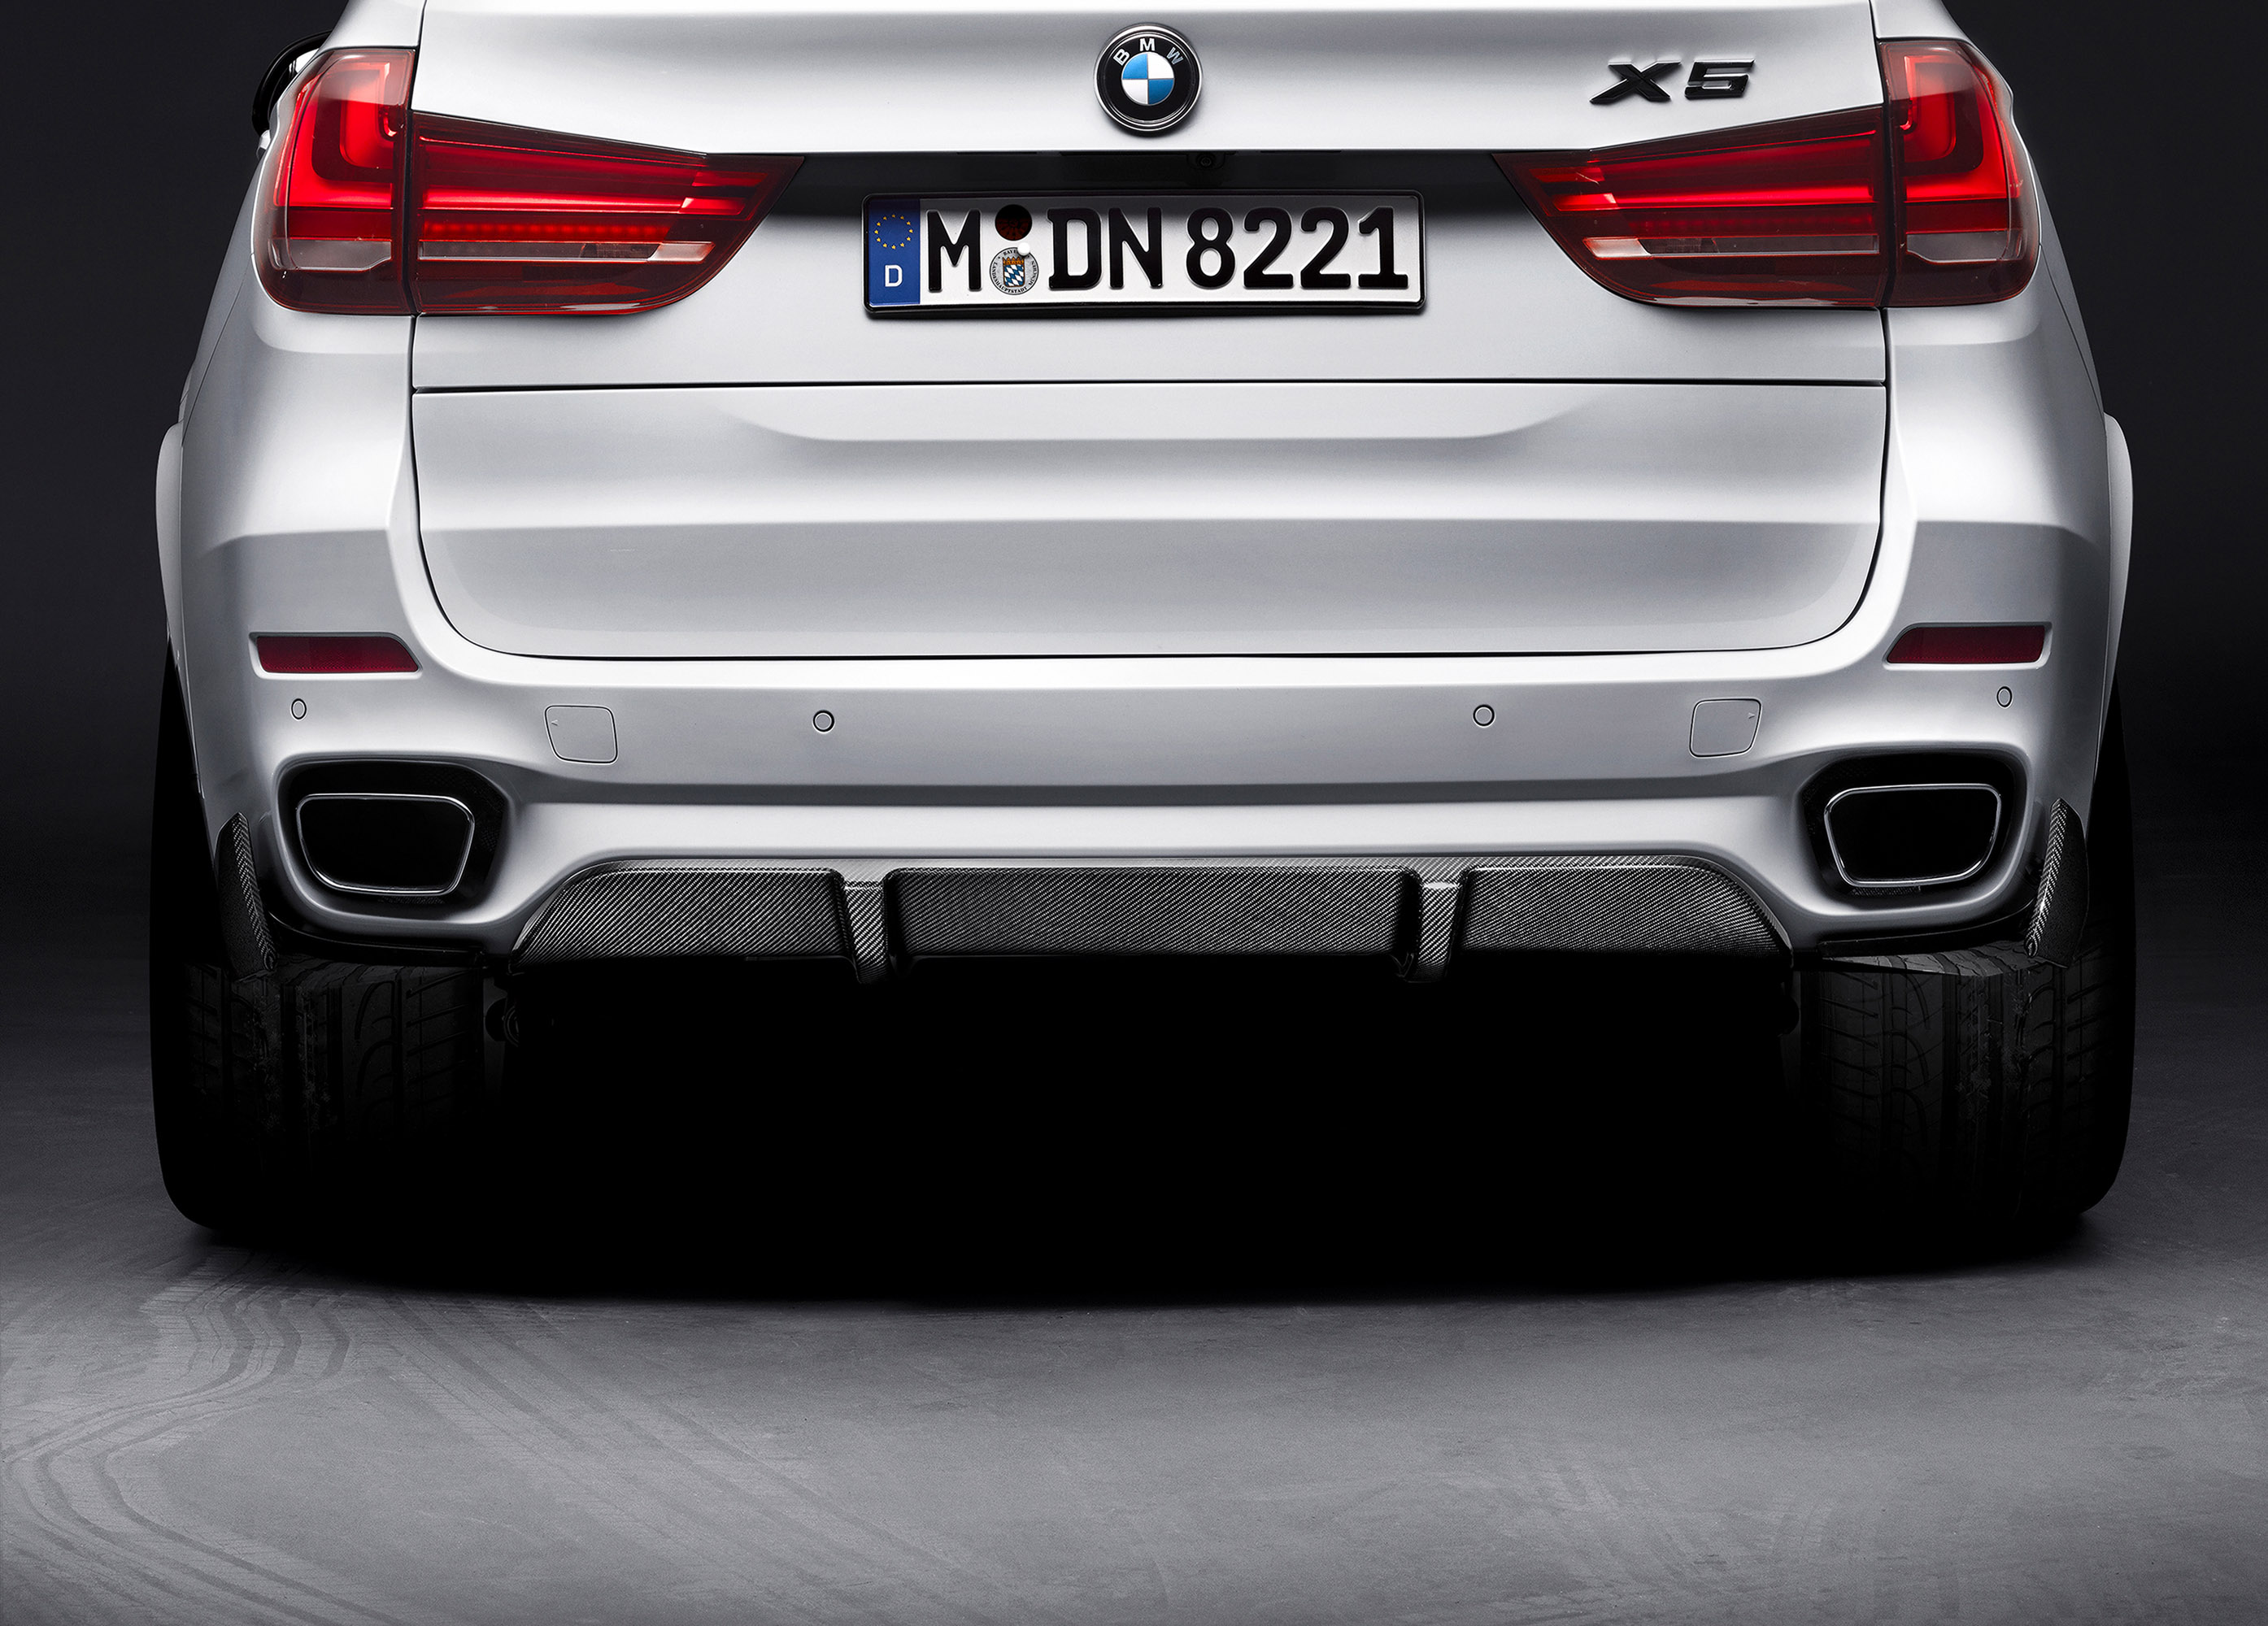 BMW X5 xDrive35i M Performance